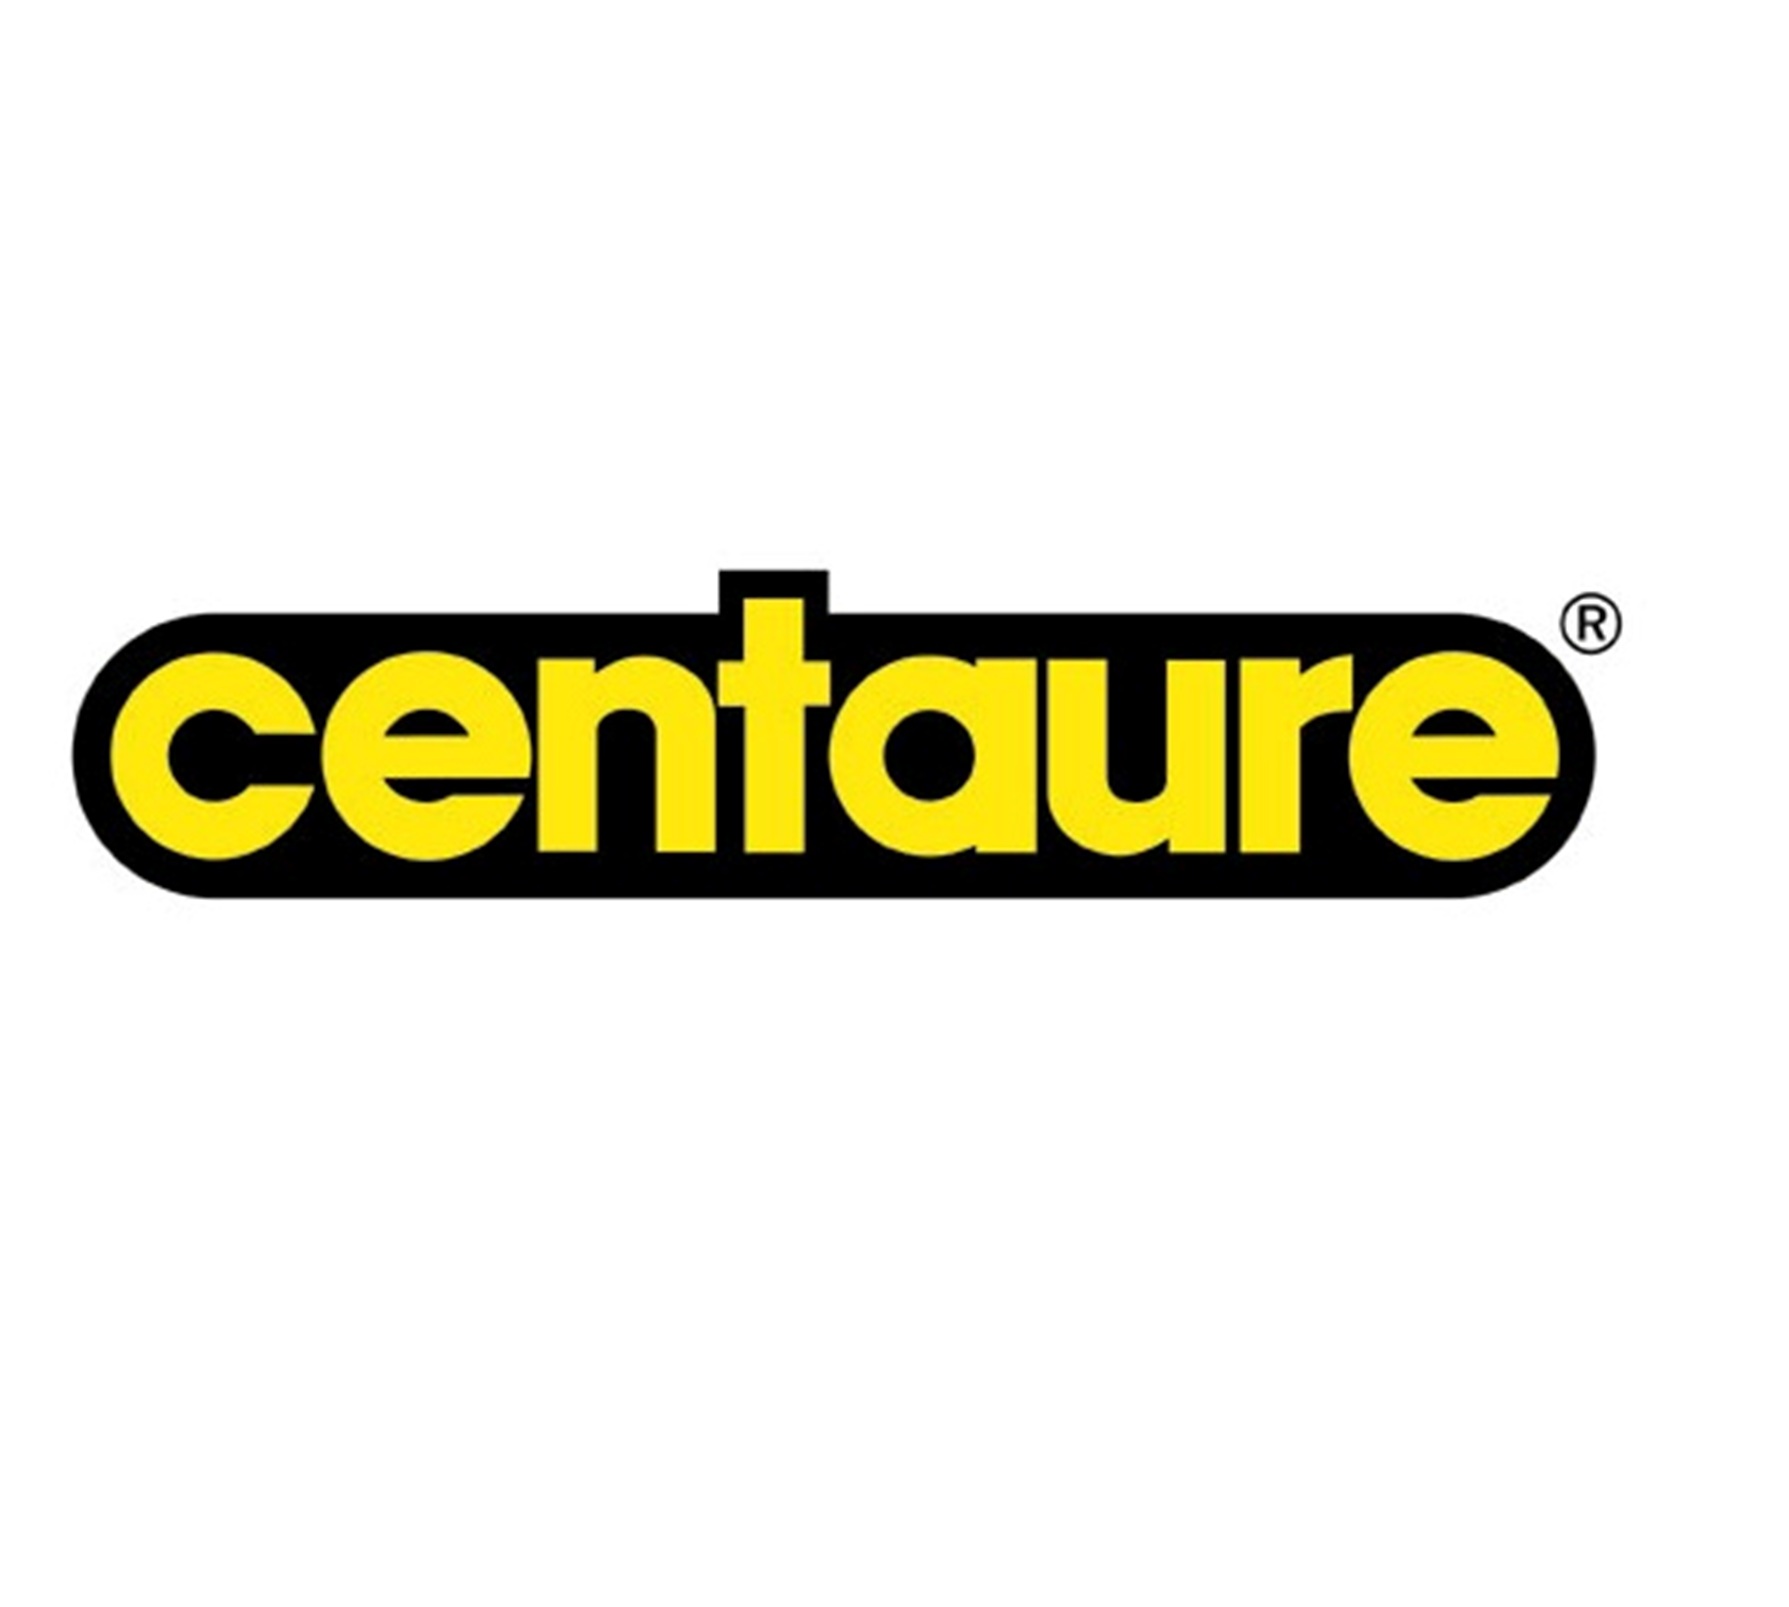 Centaure (Франция)